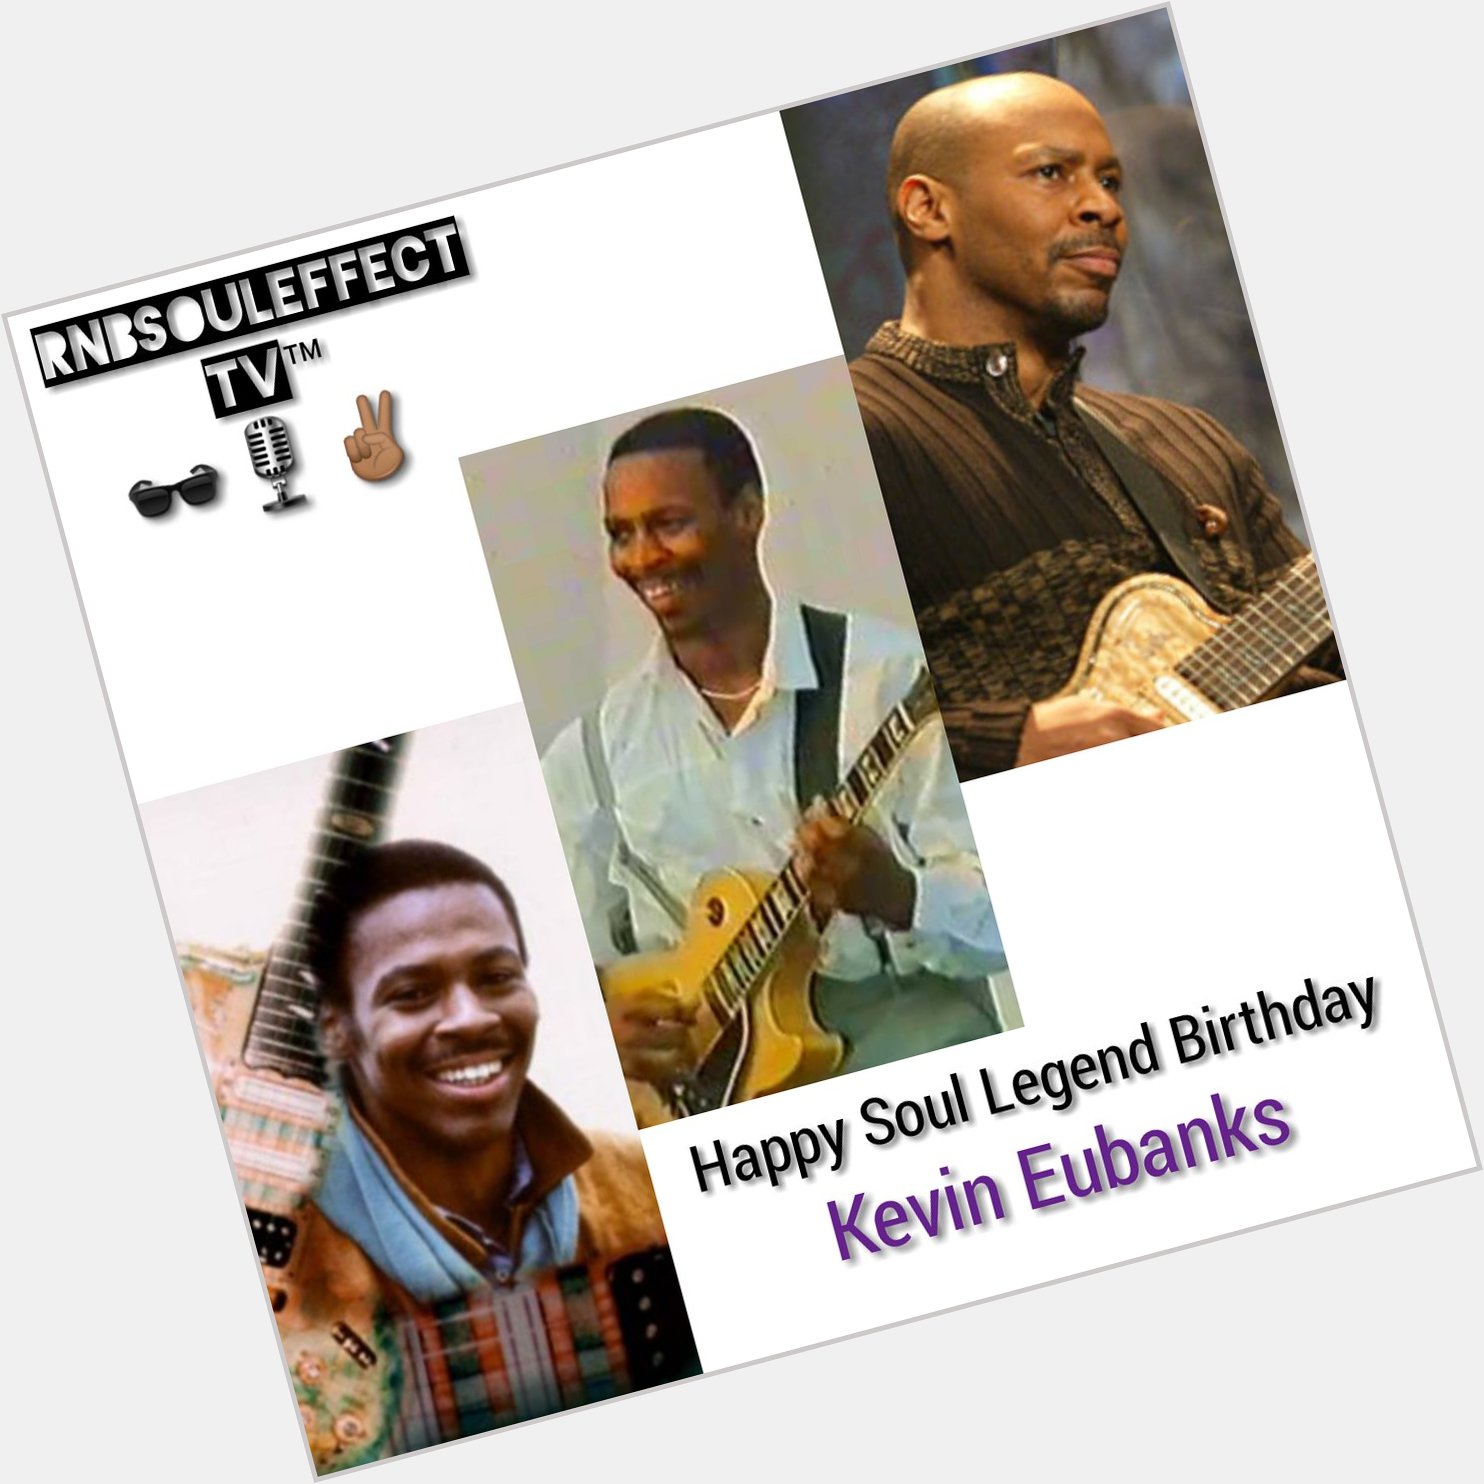 Happy Soul Legend Birthday Kevin Eubanks    